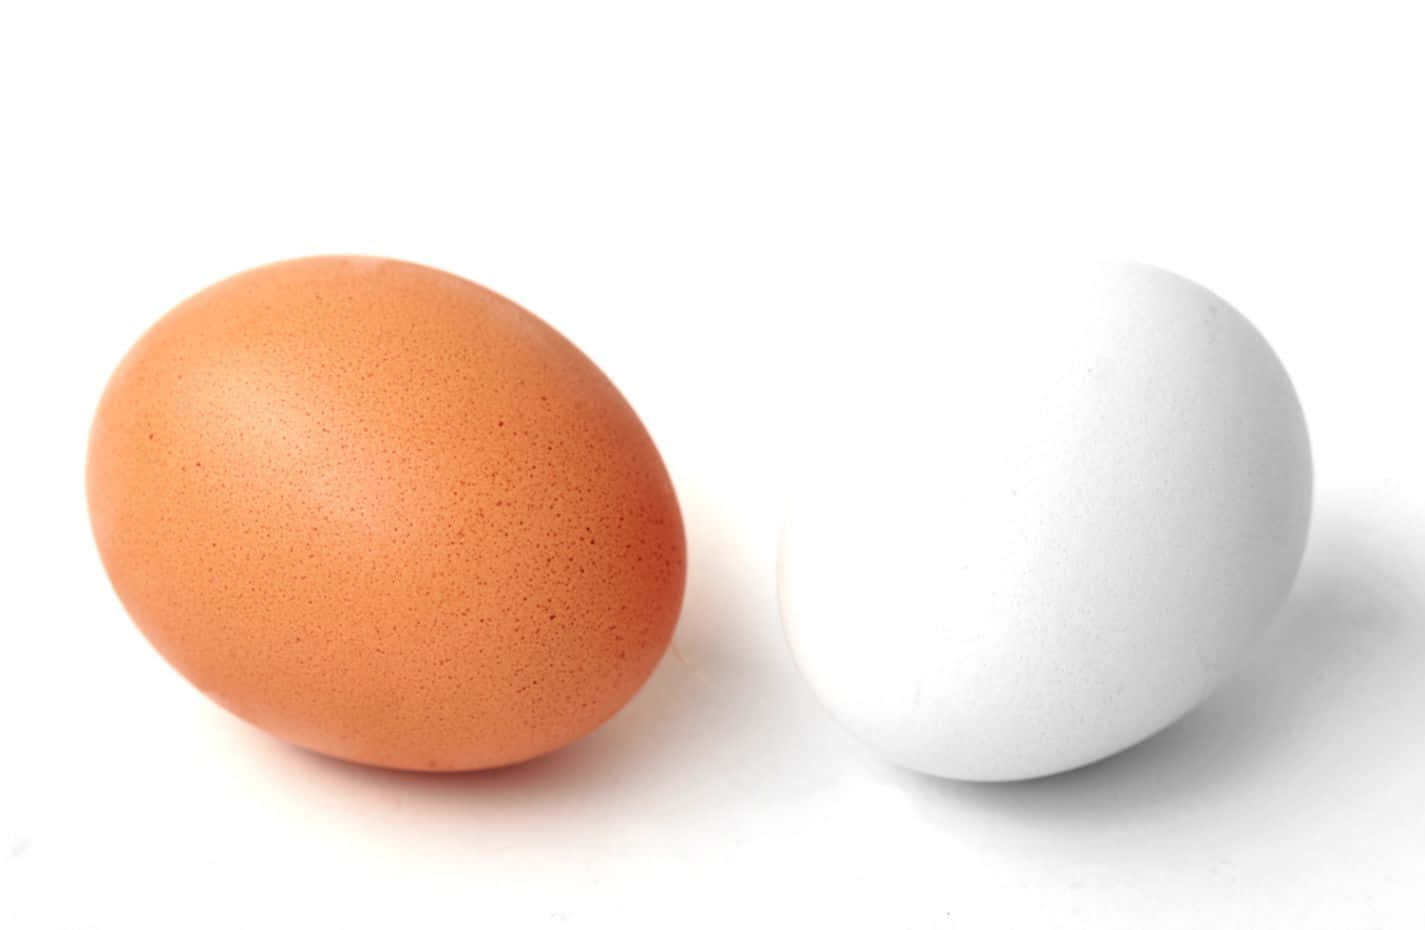 Delicious farm-fresh eggs are perfect for a breakfast